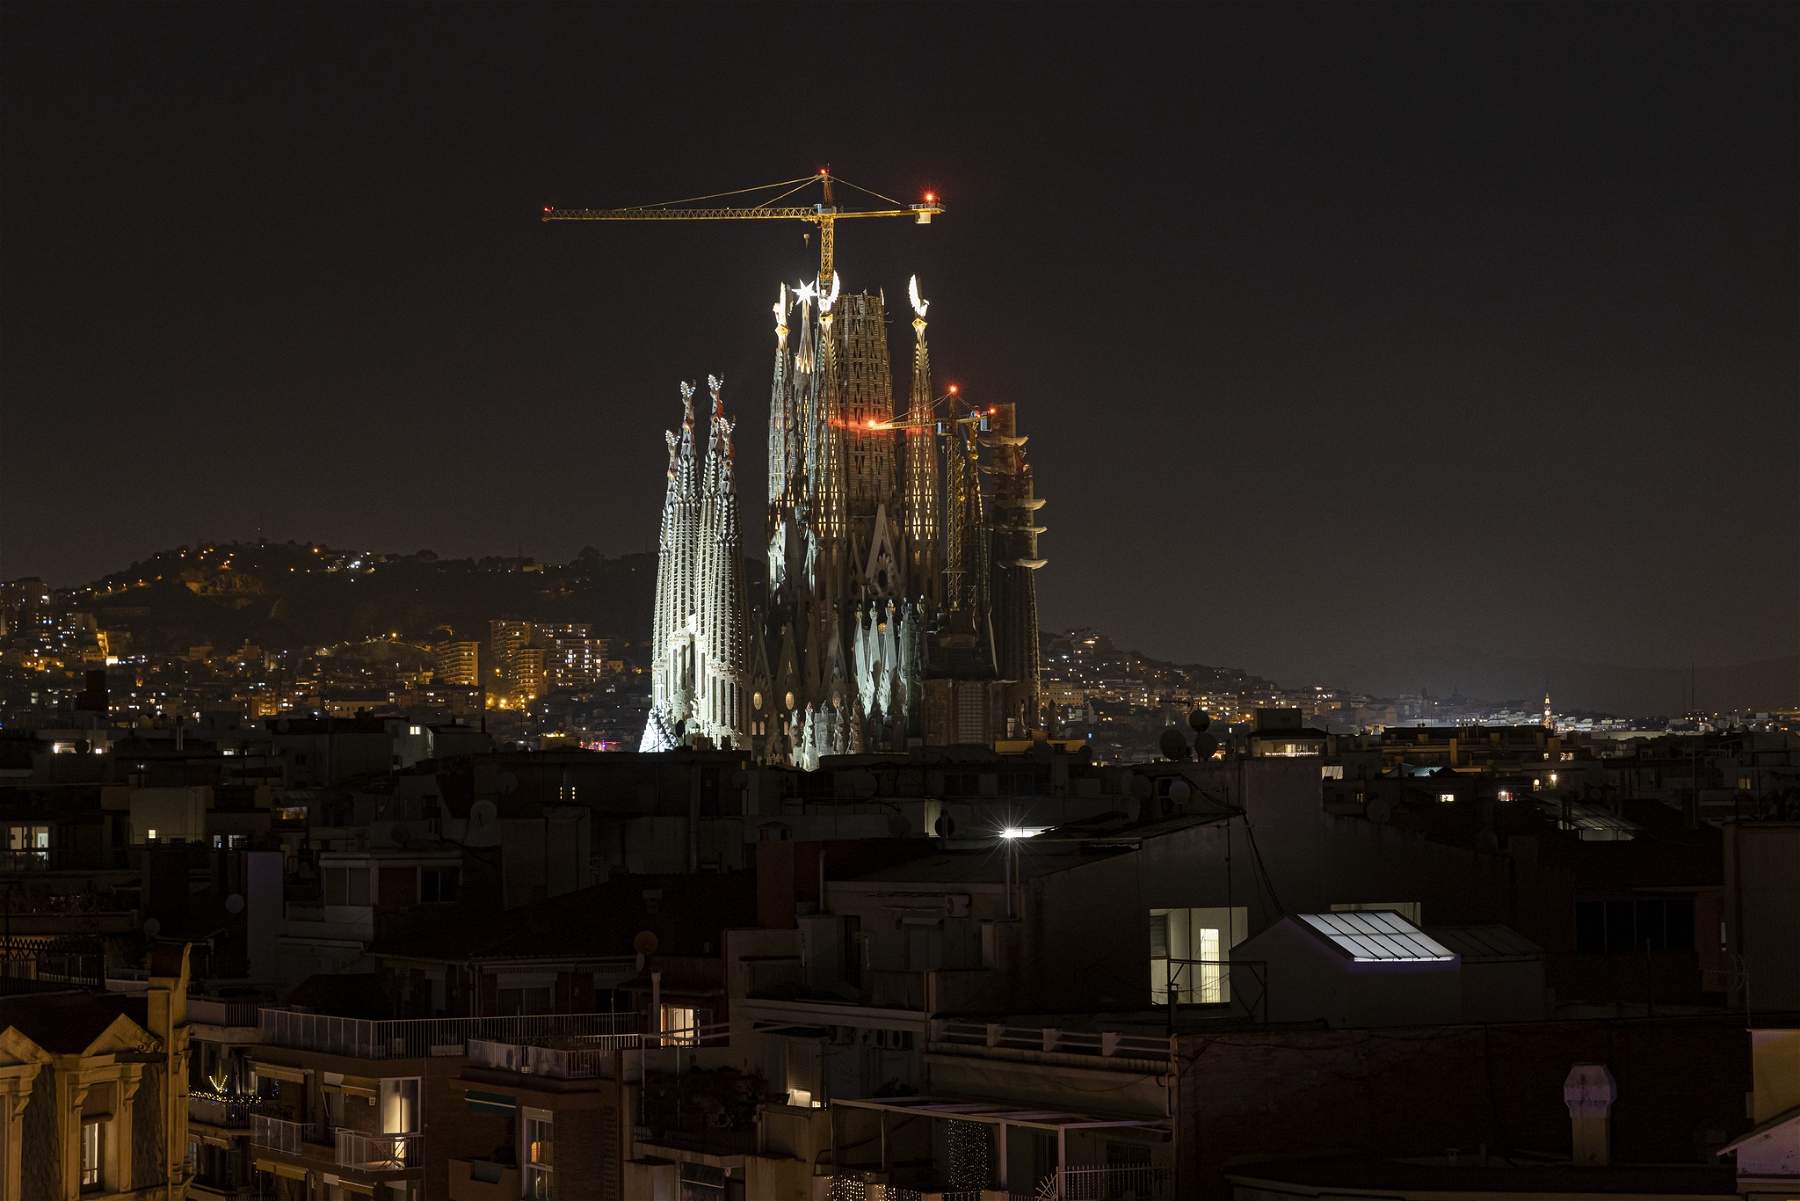 Barcelona, evangelists' towers completed at Sagrada Familia